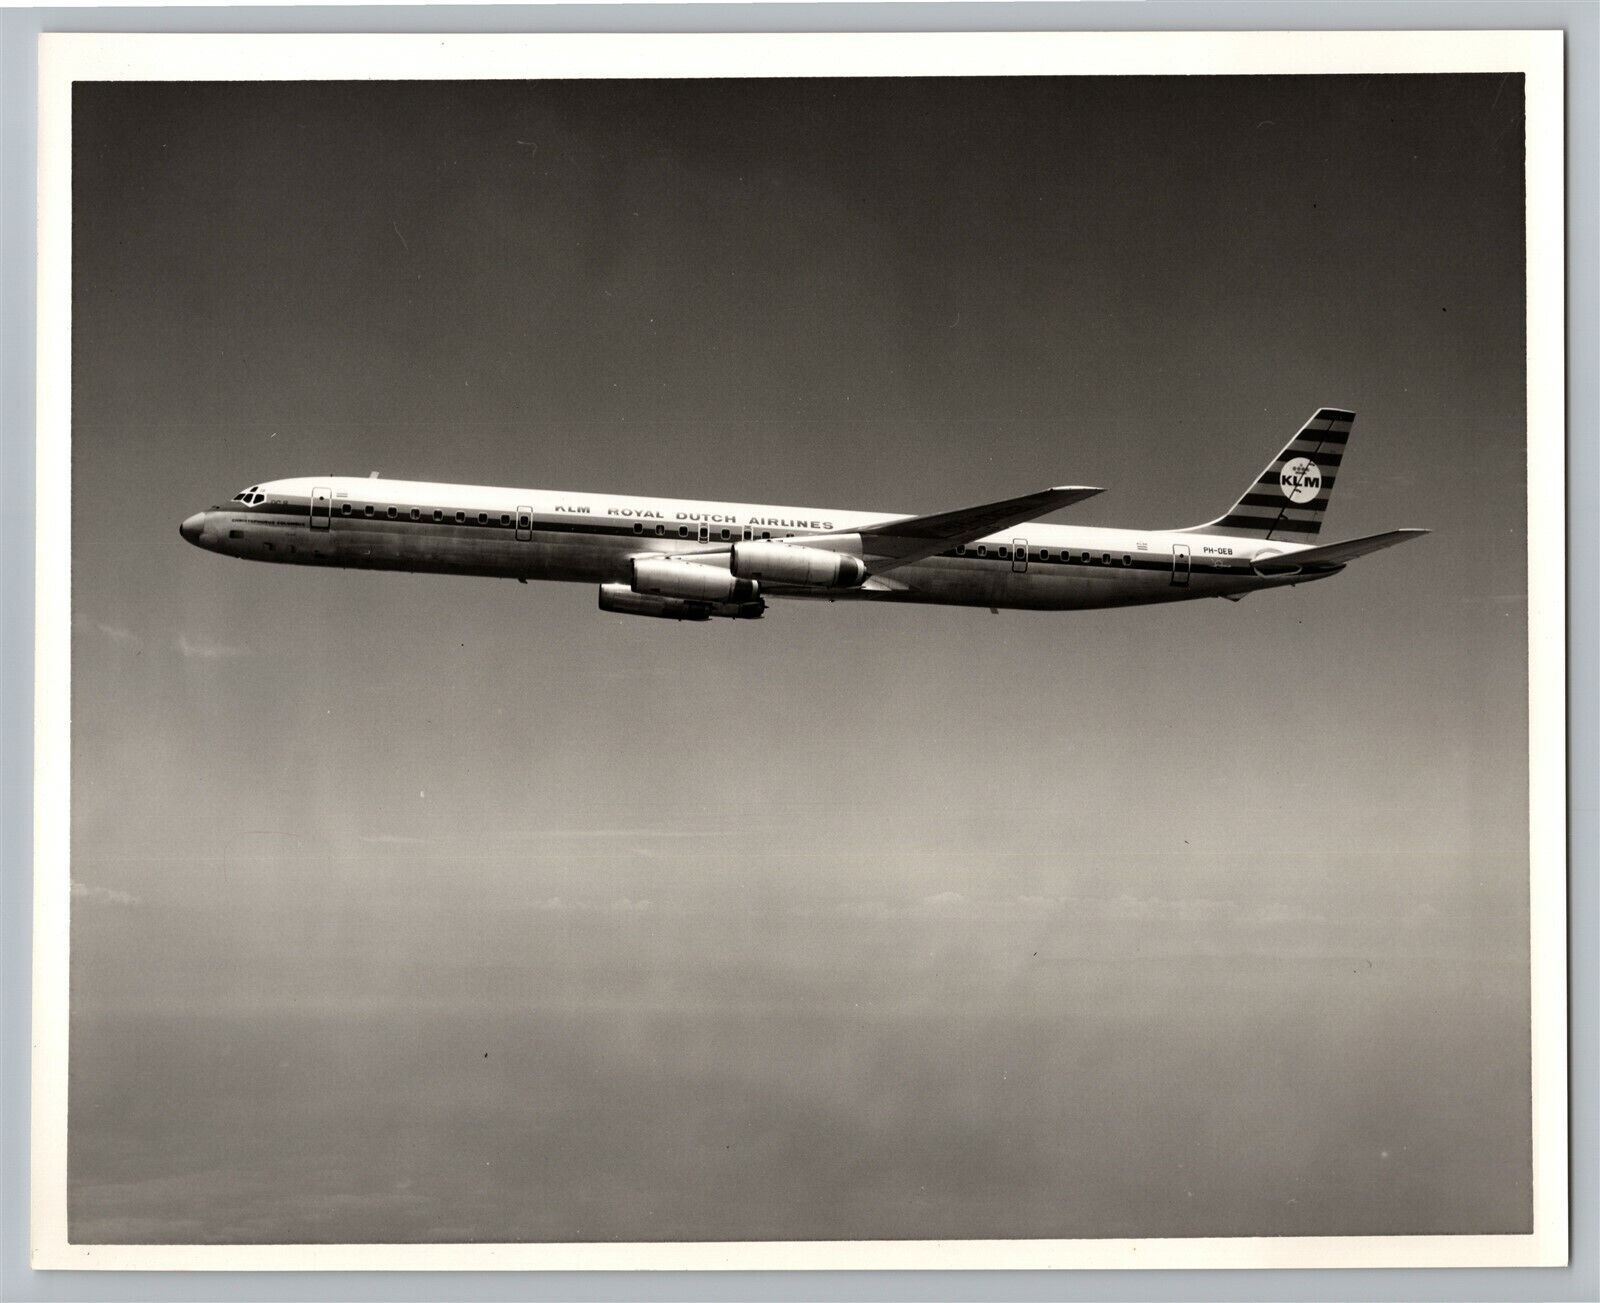 KLM Royal Dutch Airlines Jet DC 8 Midair Aviation Airplane 1960s B&W Photo #3 C2